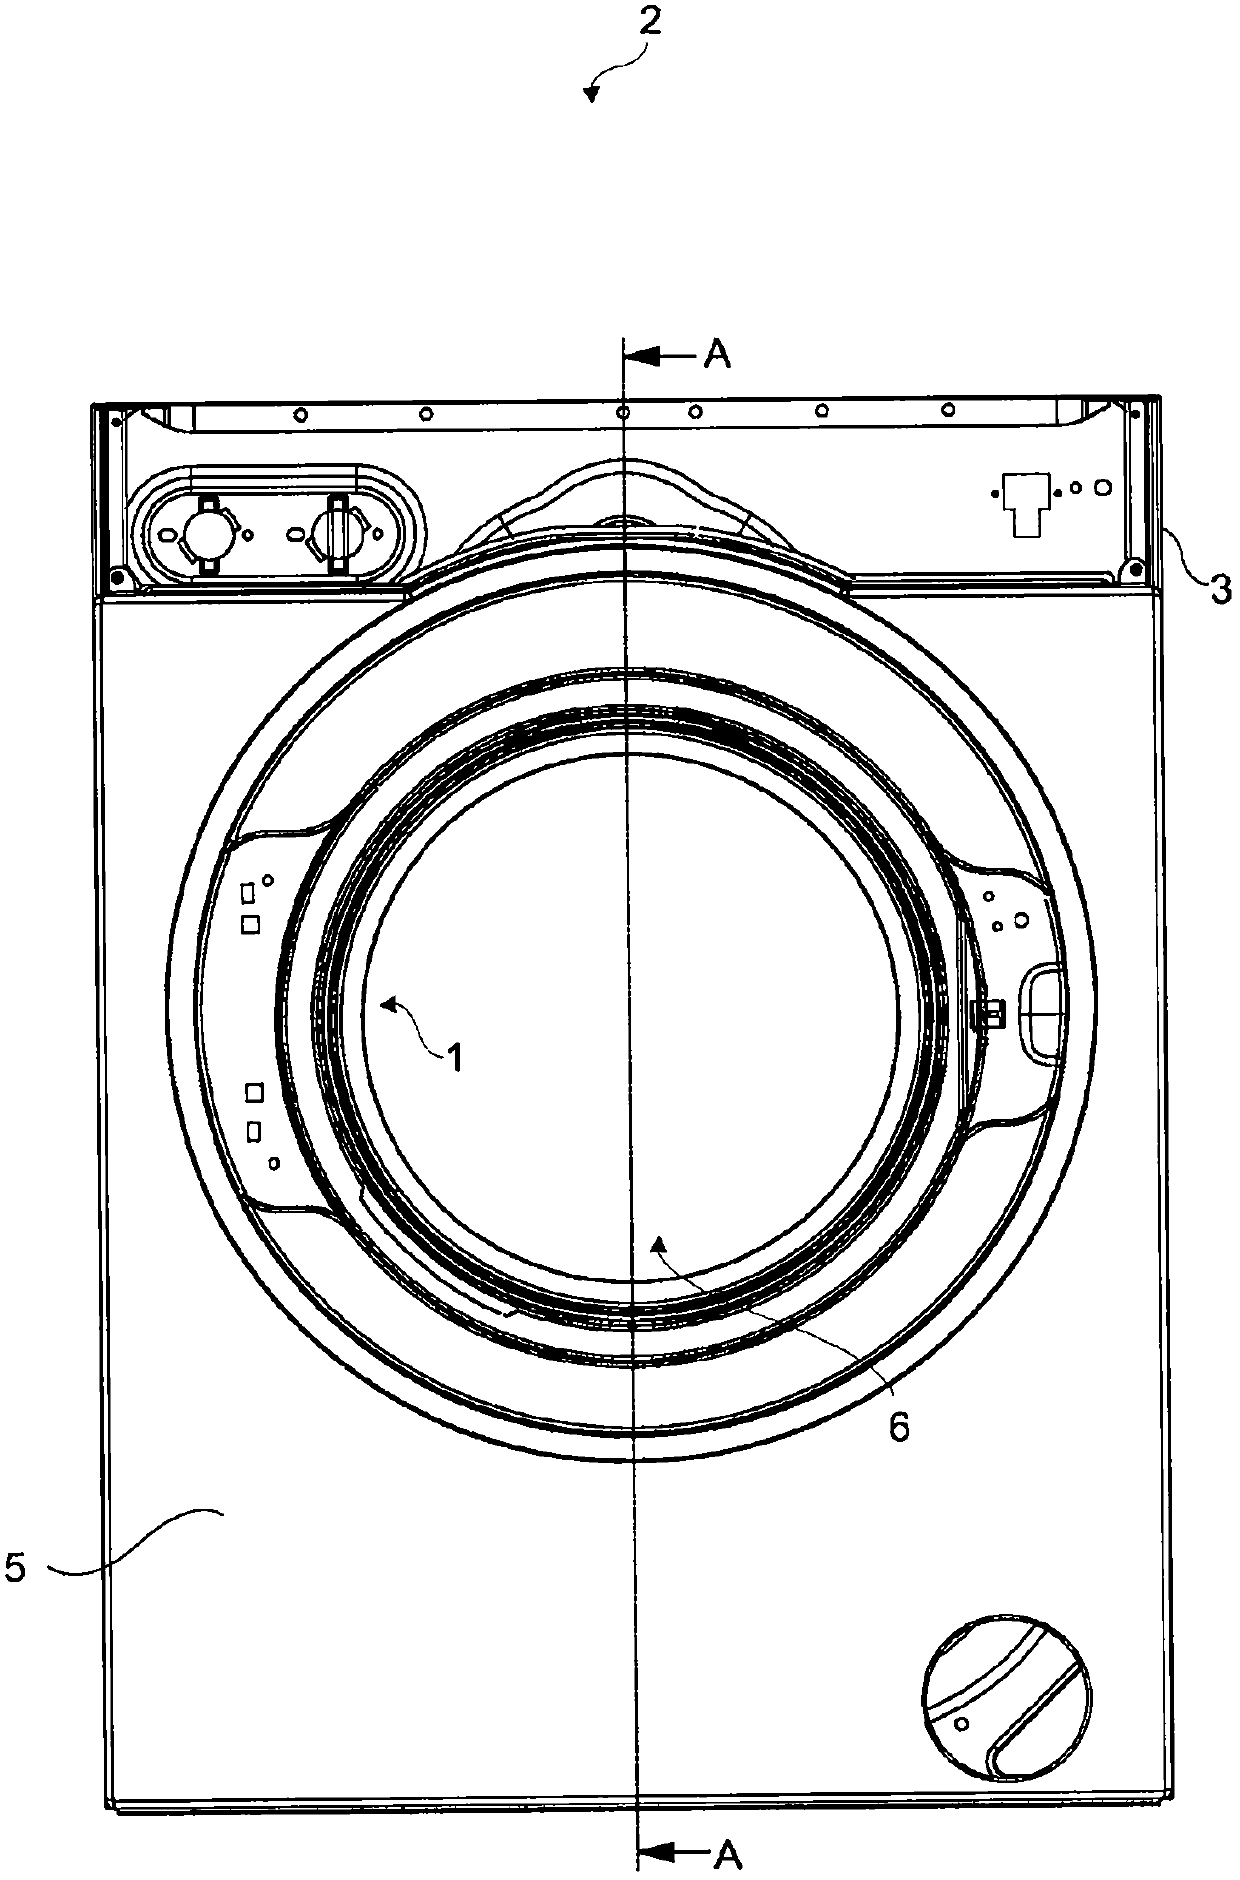 Washers used in washing machines